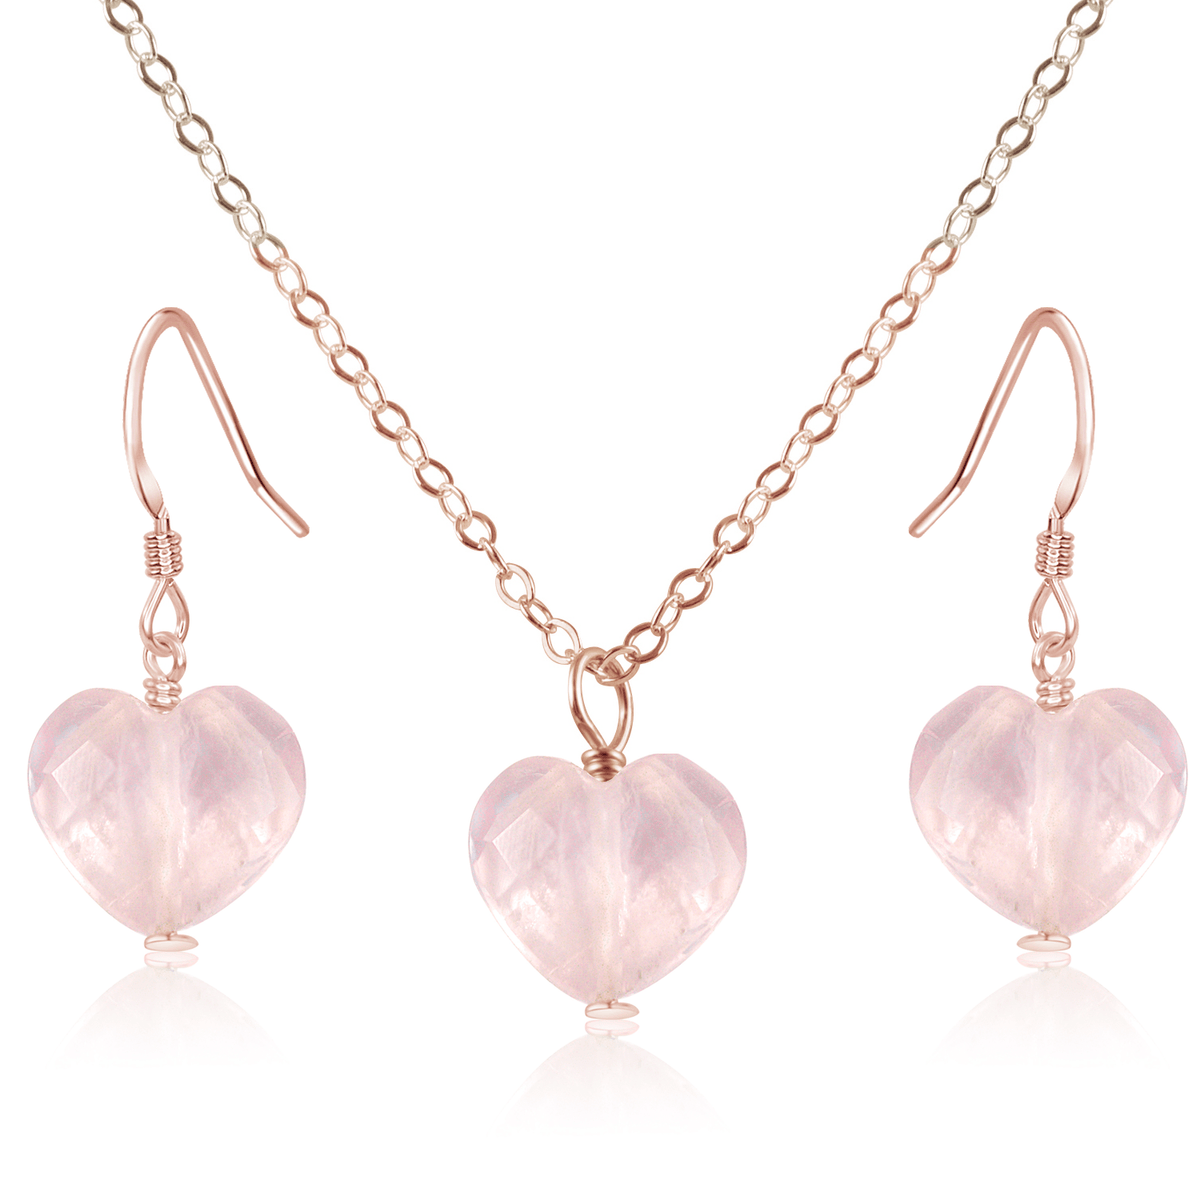 Rose Quartz Crystal Heart Jewellery Set - Rose Quartz Crystal Heart Jewellery Set - 14k Rose Gold Fill / Cable / Necklace & Earrings - Luna Tide Handmade Crystal Jewellery